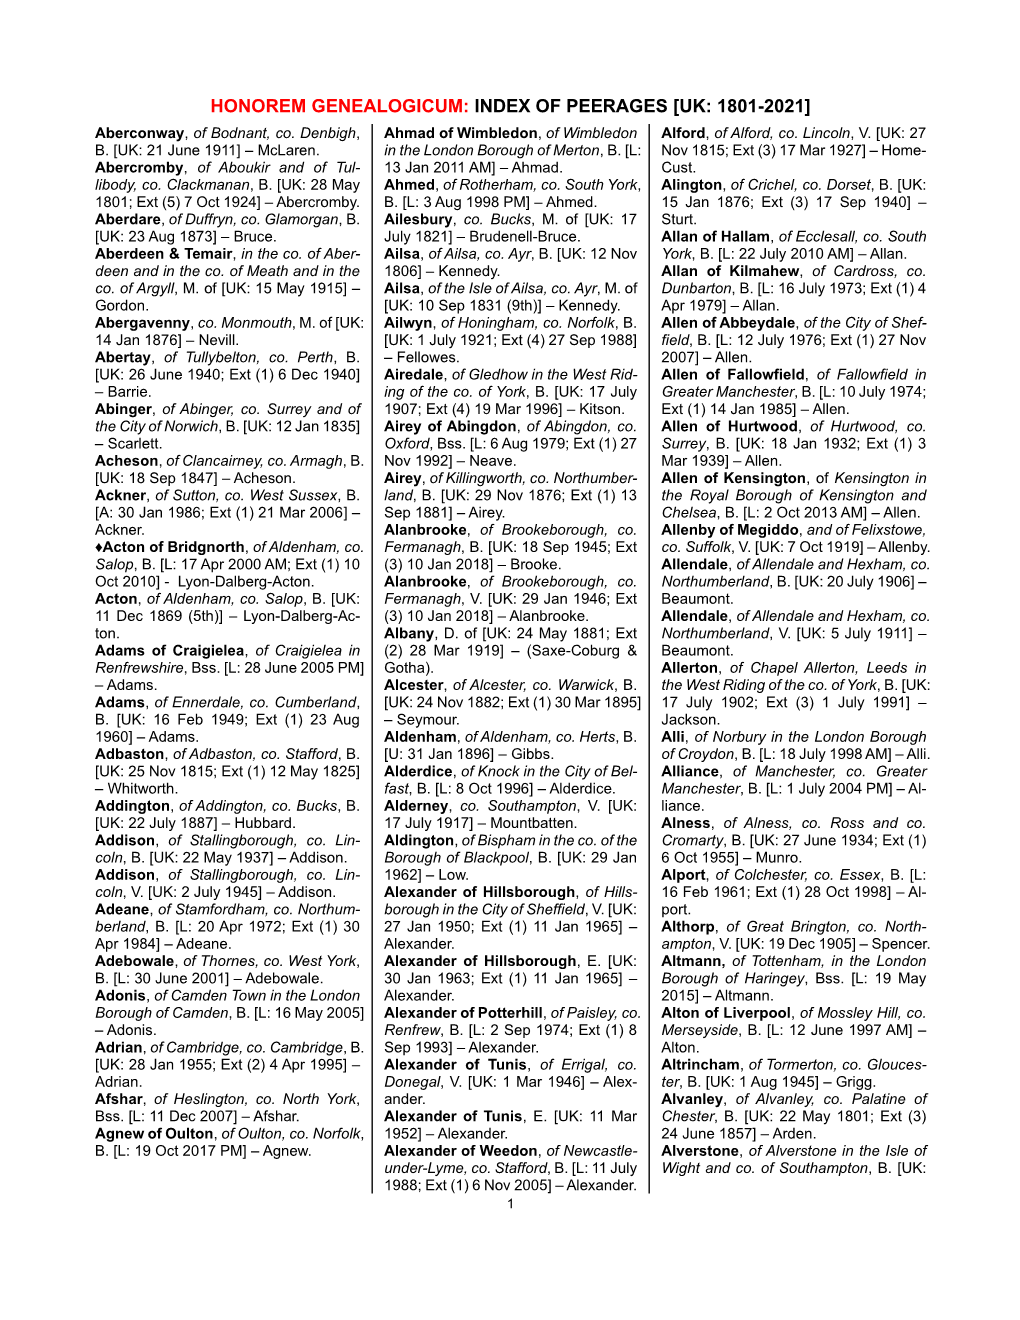 HONOREM GENEALOGICUM: INDEX of PEERAGES [UK: 1801-2021] Aberconway, of Bodnant, Co